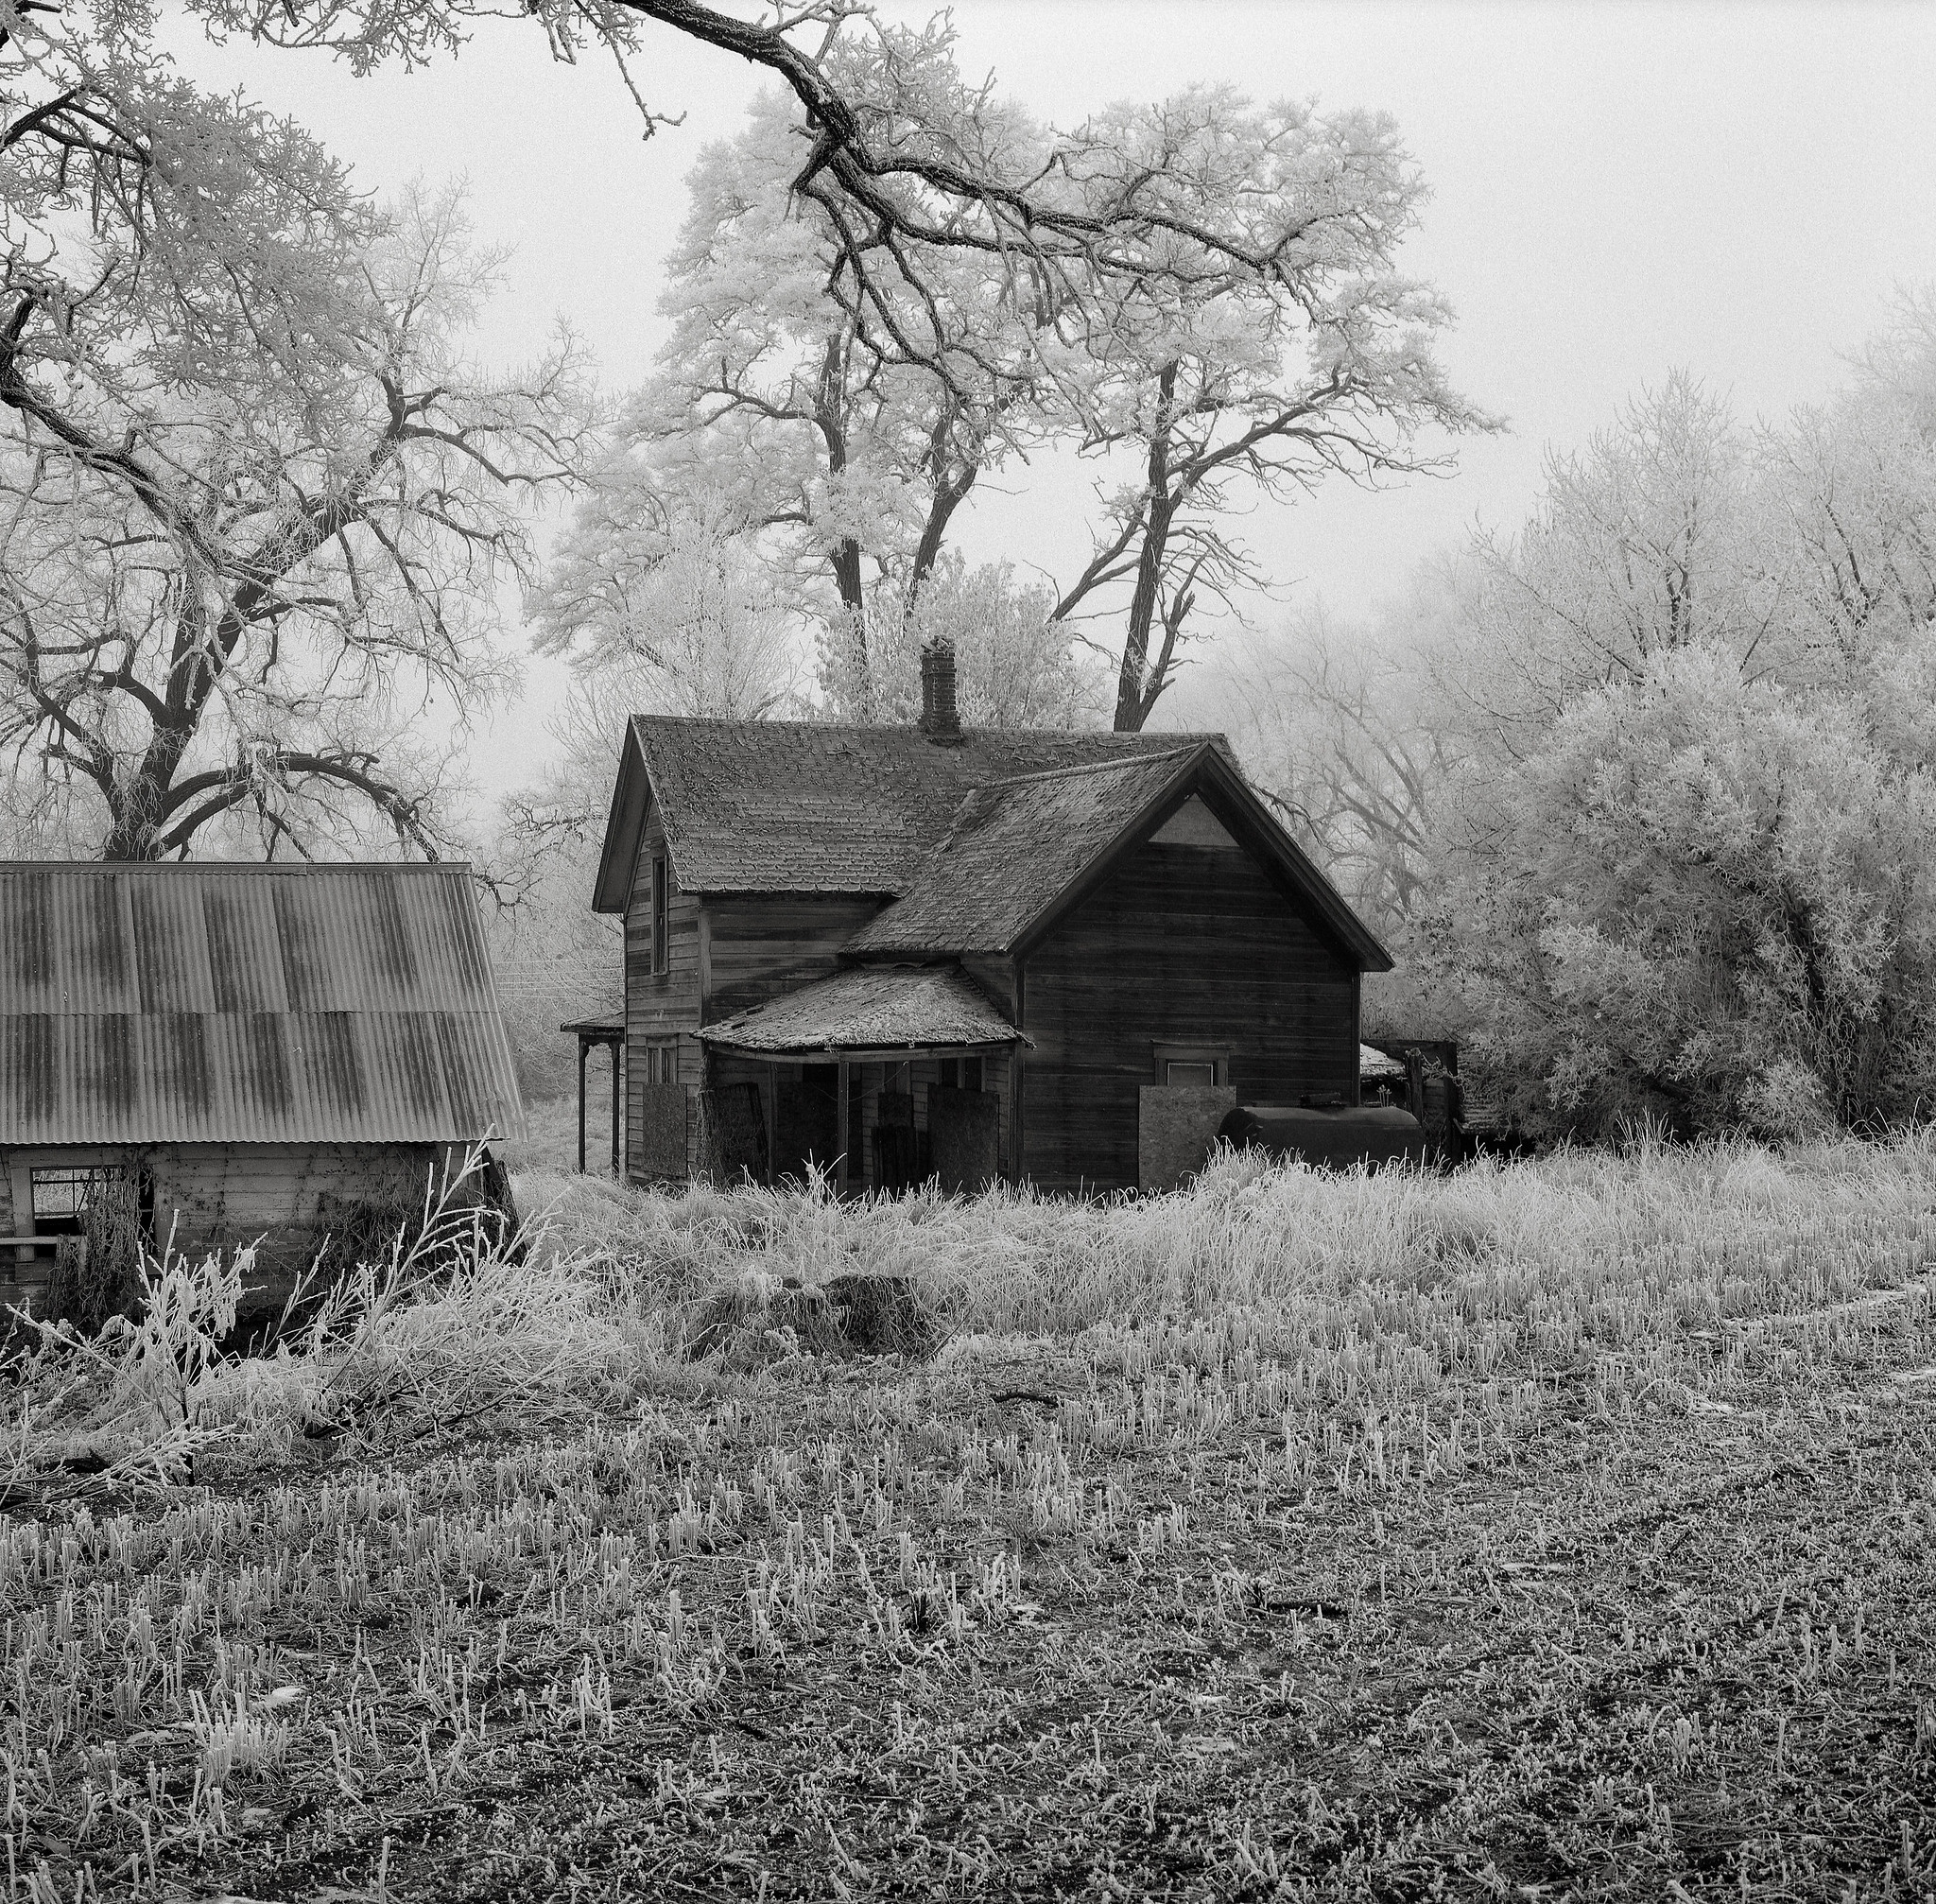 Abandoned Farmhouse with Hoarfrost